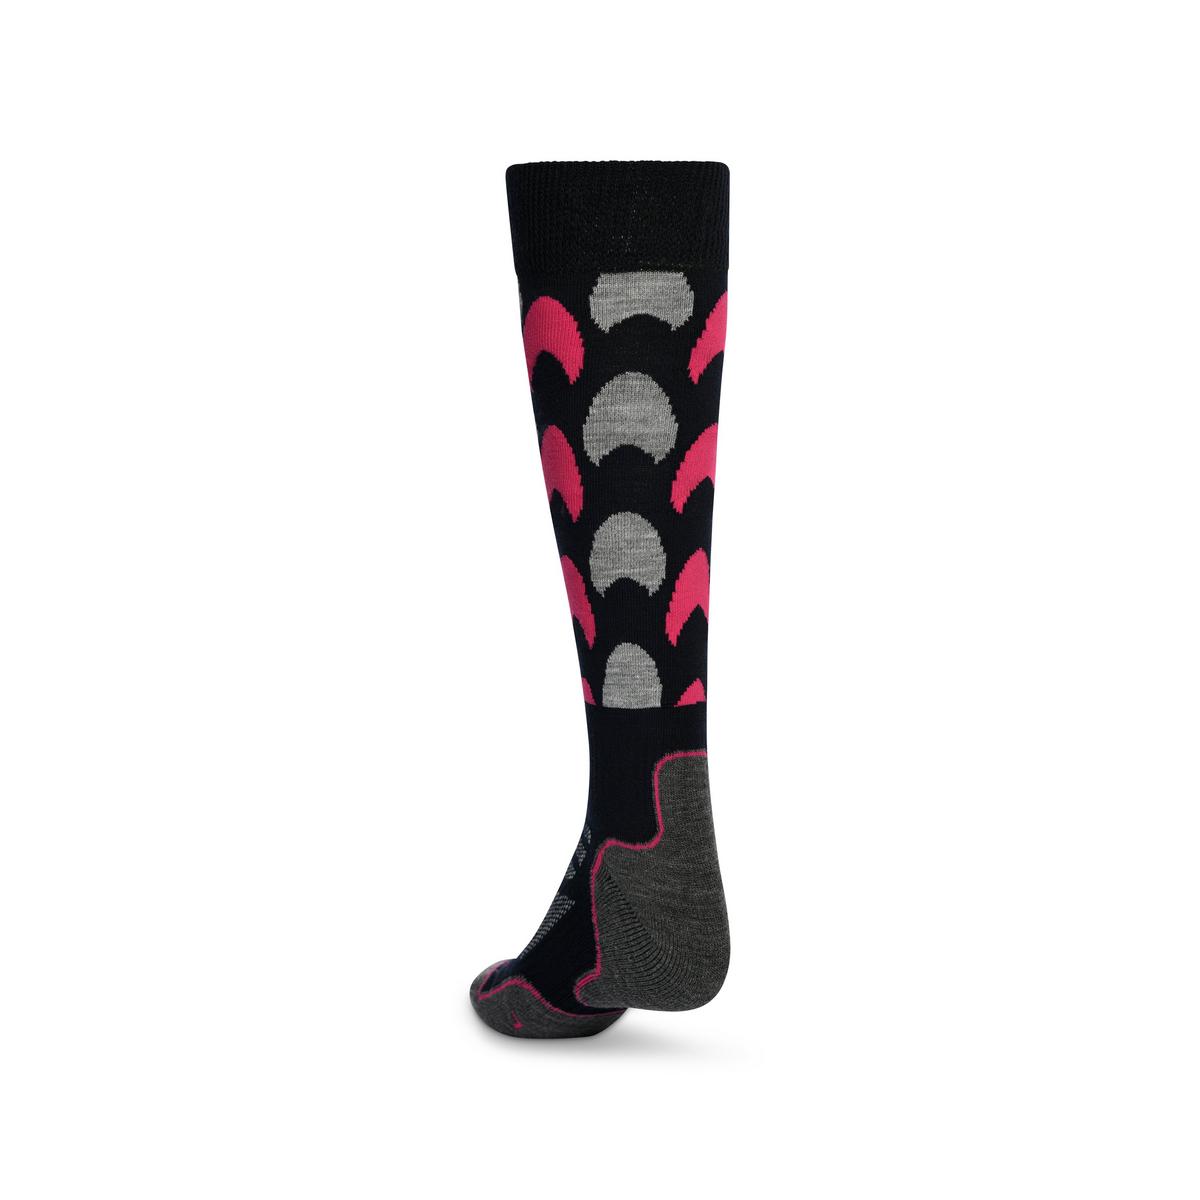 Sundown Women's PROMAX Ski Sock - Pink